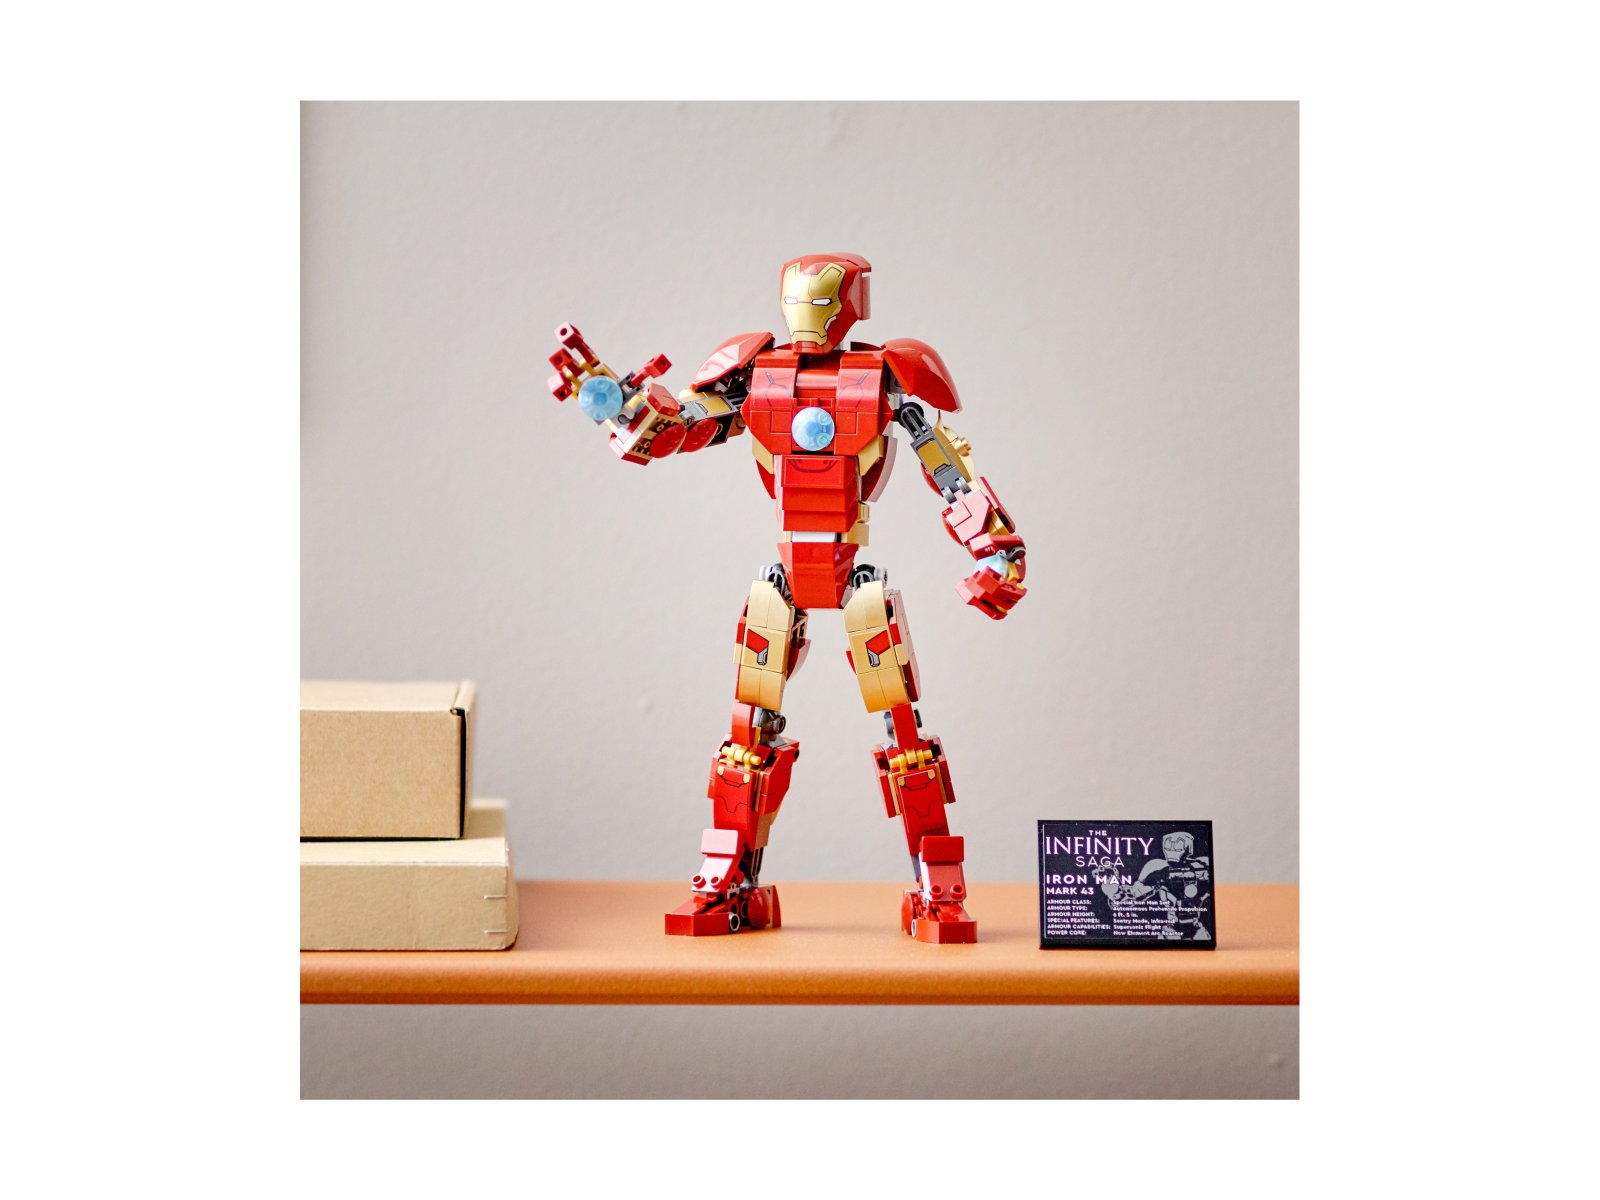 LEGO 76206 Marvel Figurka Iron Mana